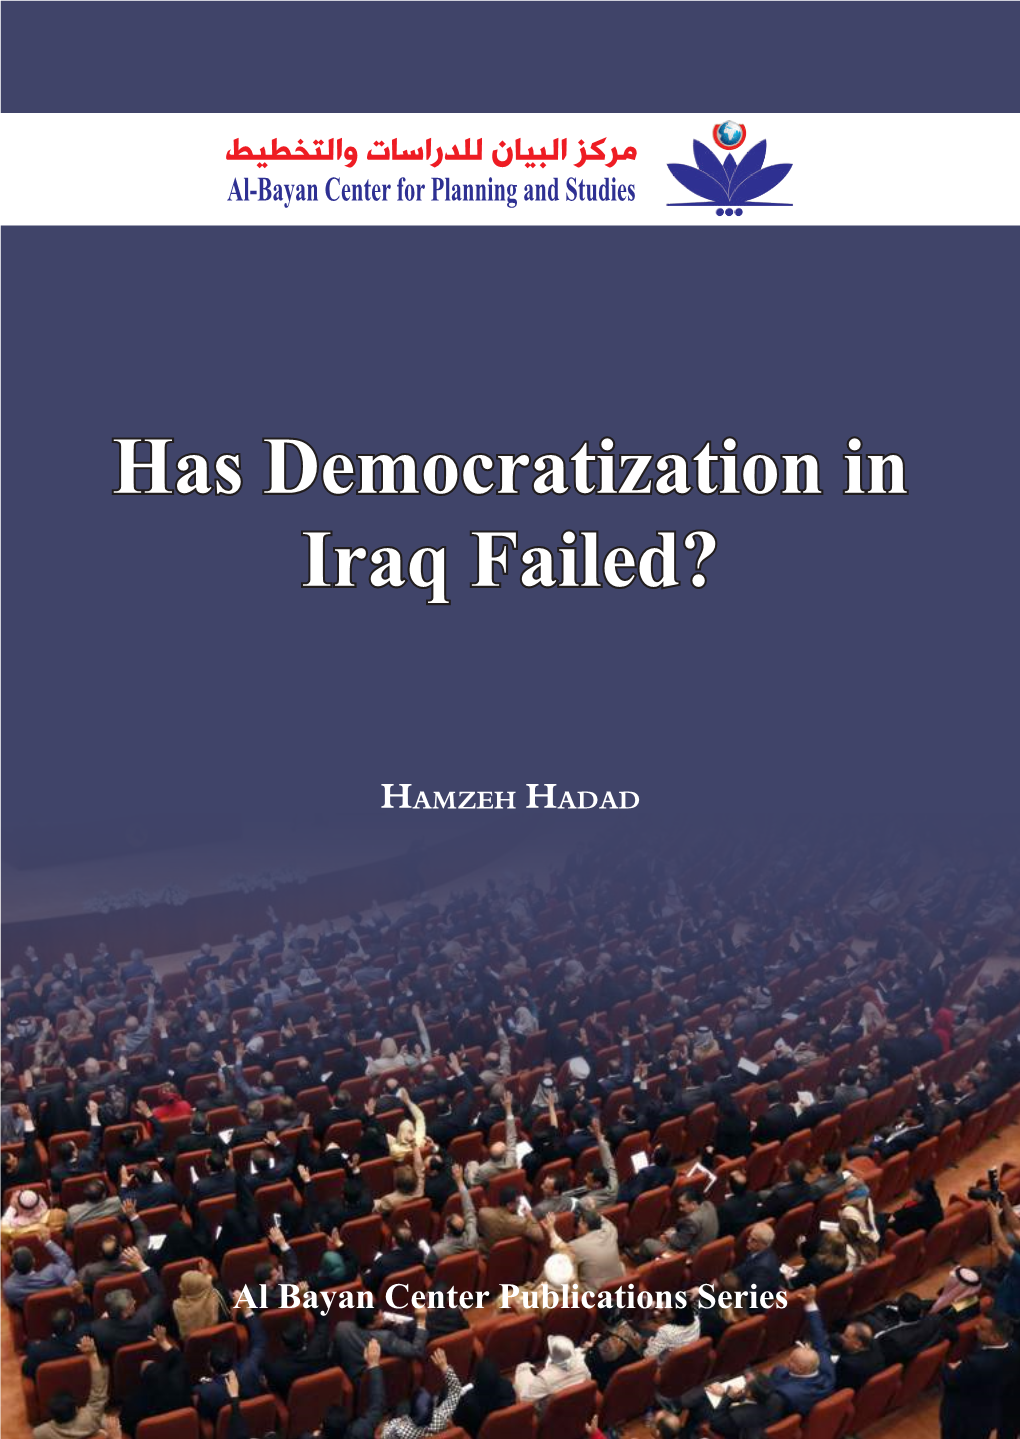 Has Democratization in Iraq Failed?